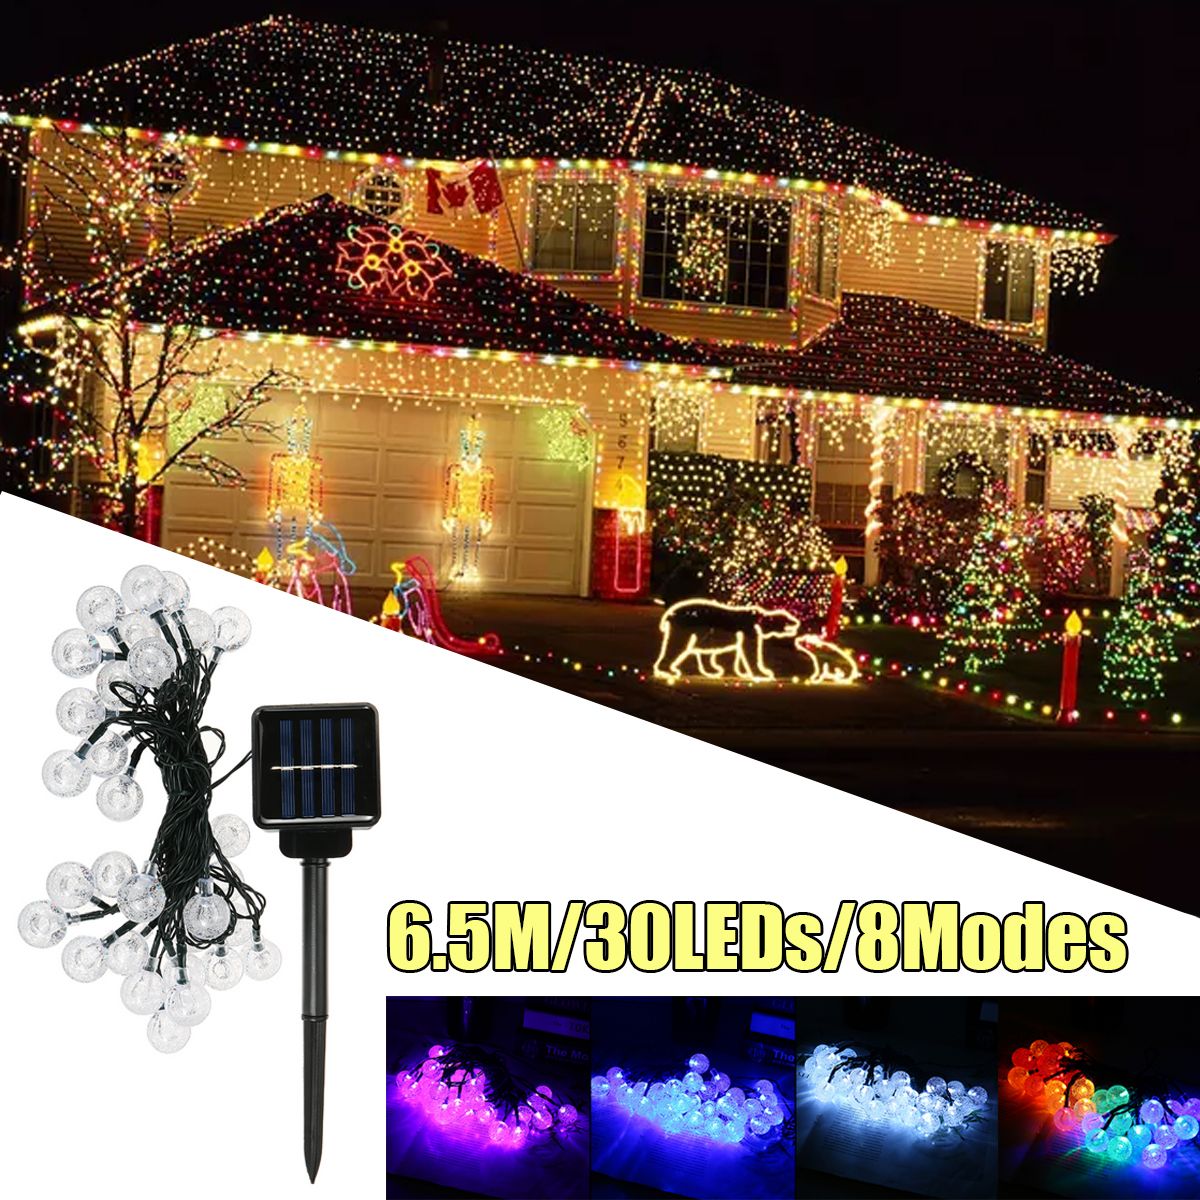 65m-Solar-Powered-30-LEDs-String-Light-Garden-Paths-Yard-Decor-Lamp-Outdoor-Waterproof-1719913